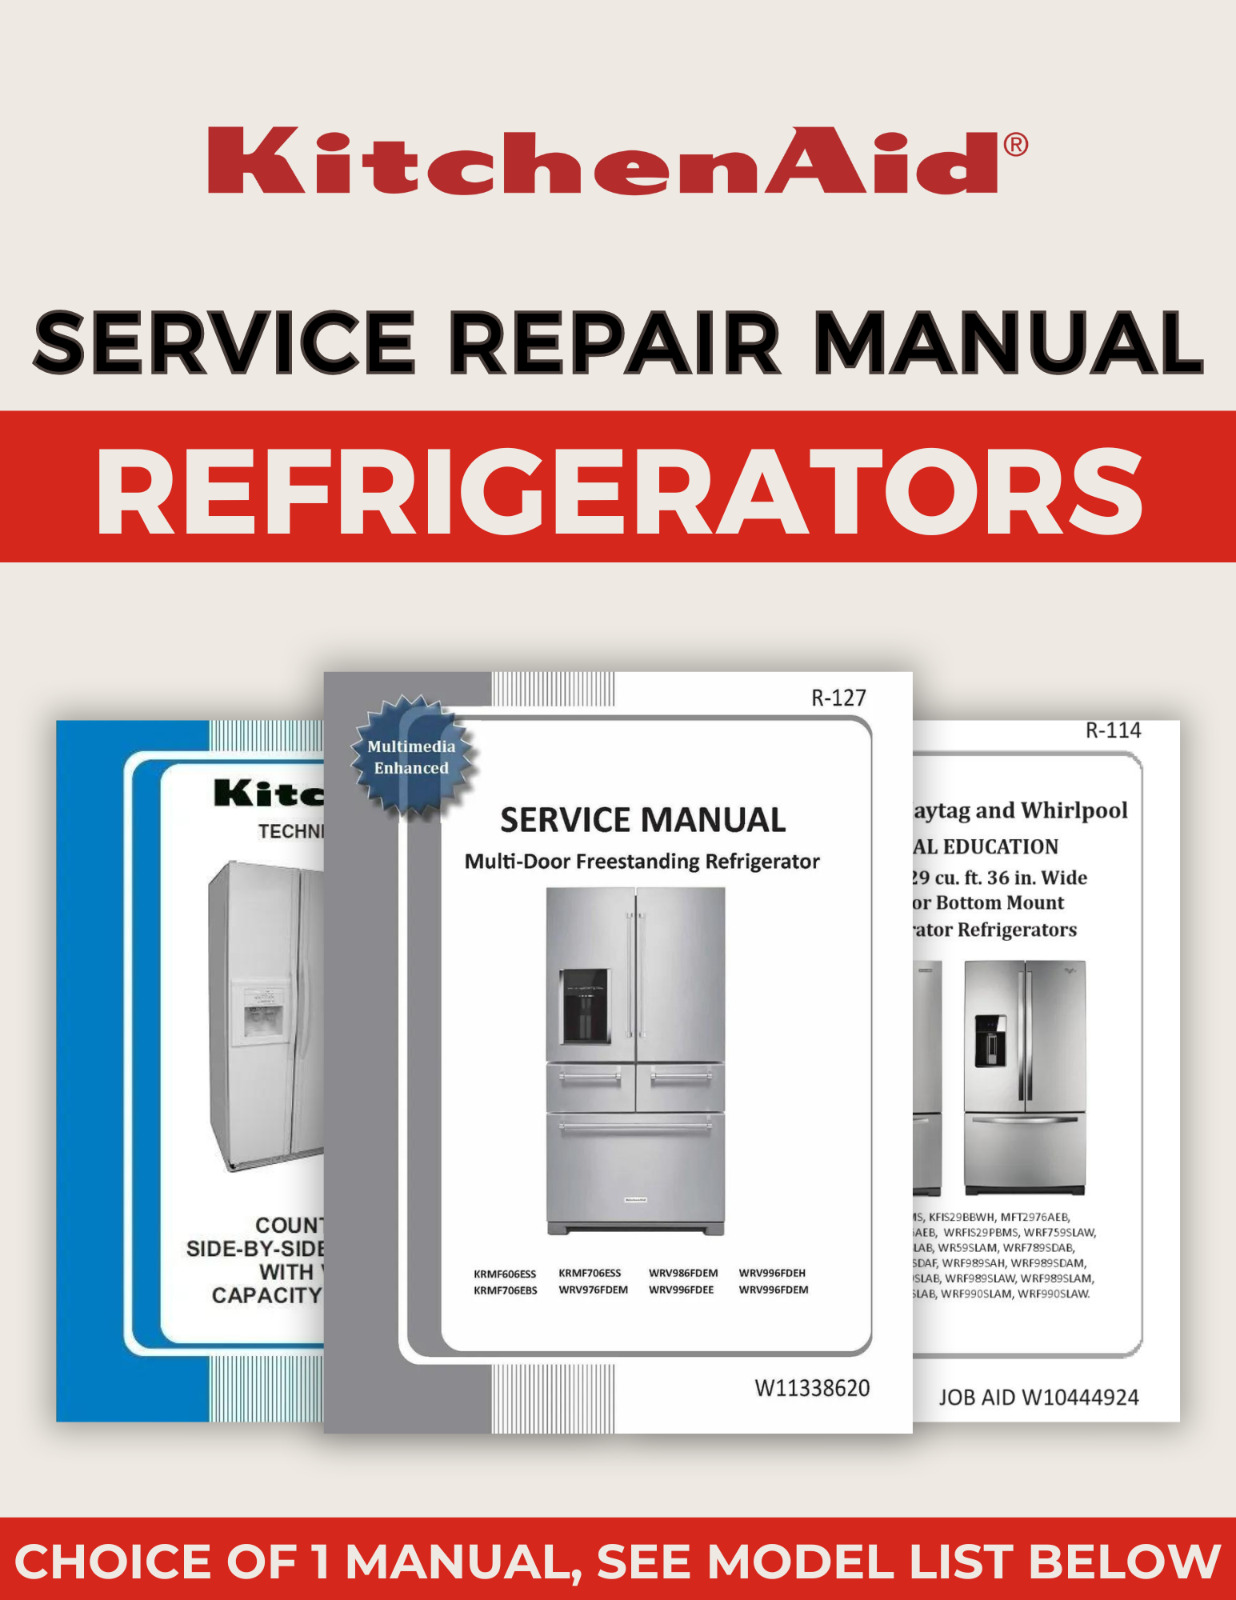 Repair Manual: KitchenAid REFRIGERATORS (choice of 1 manual)